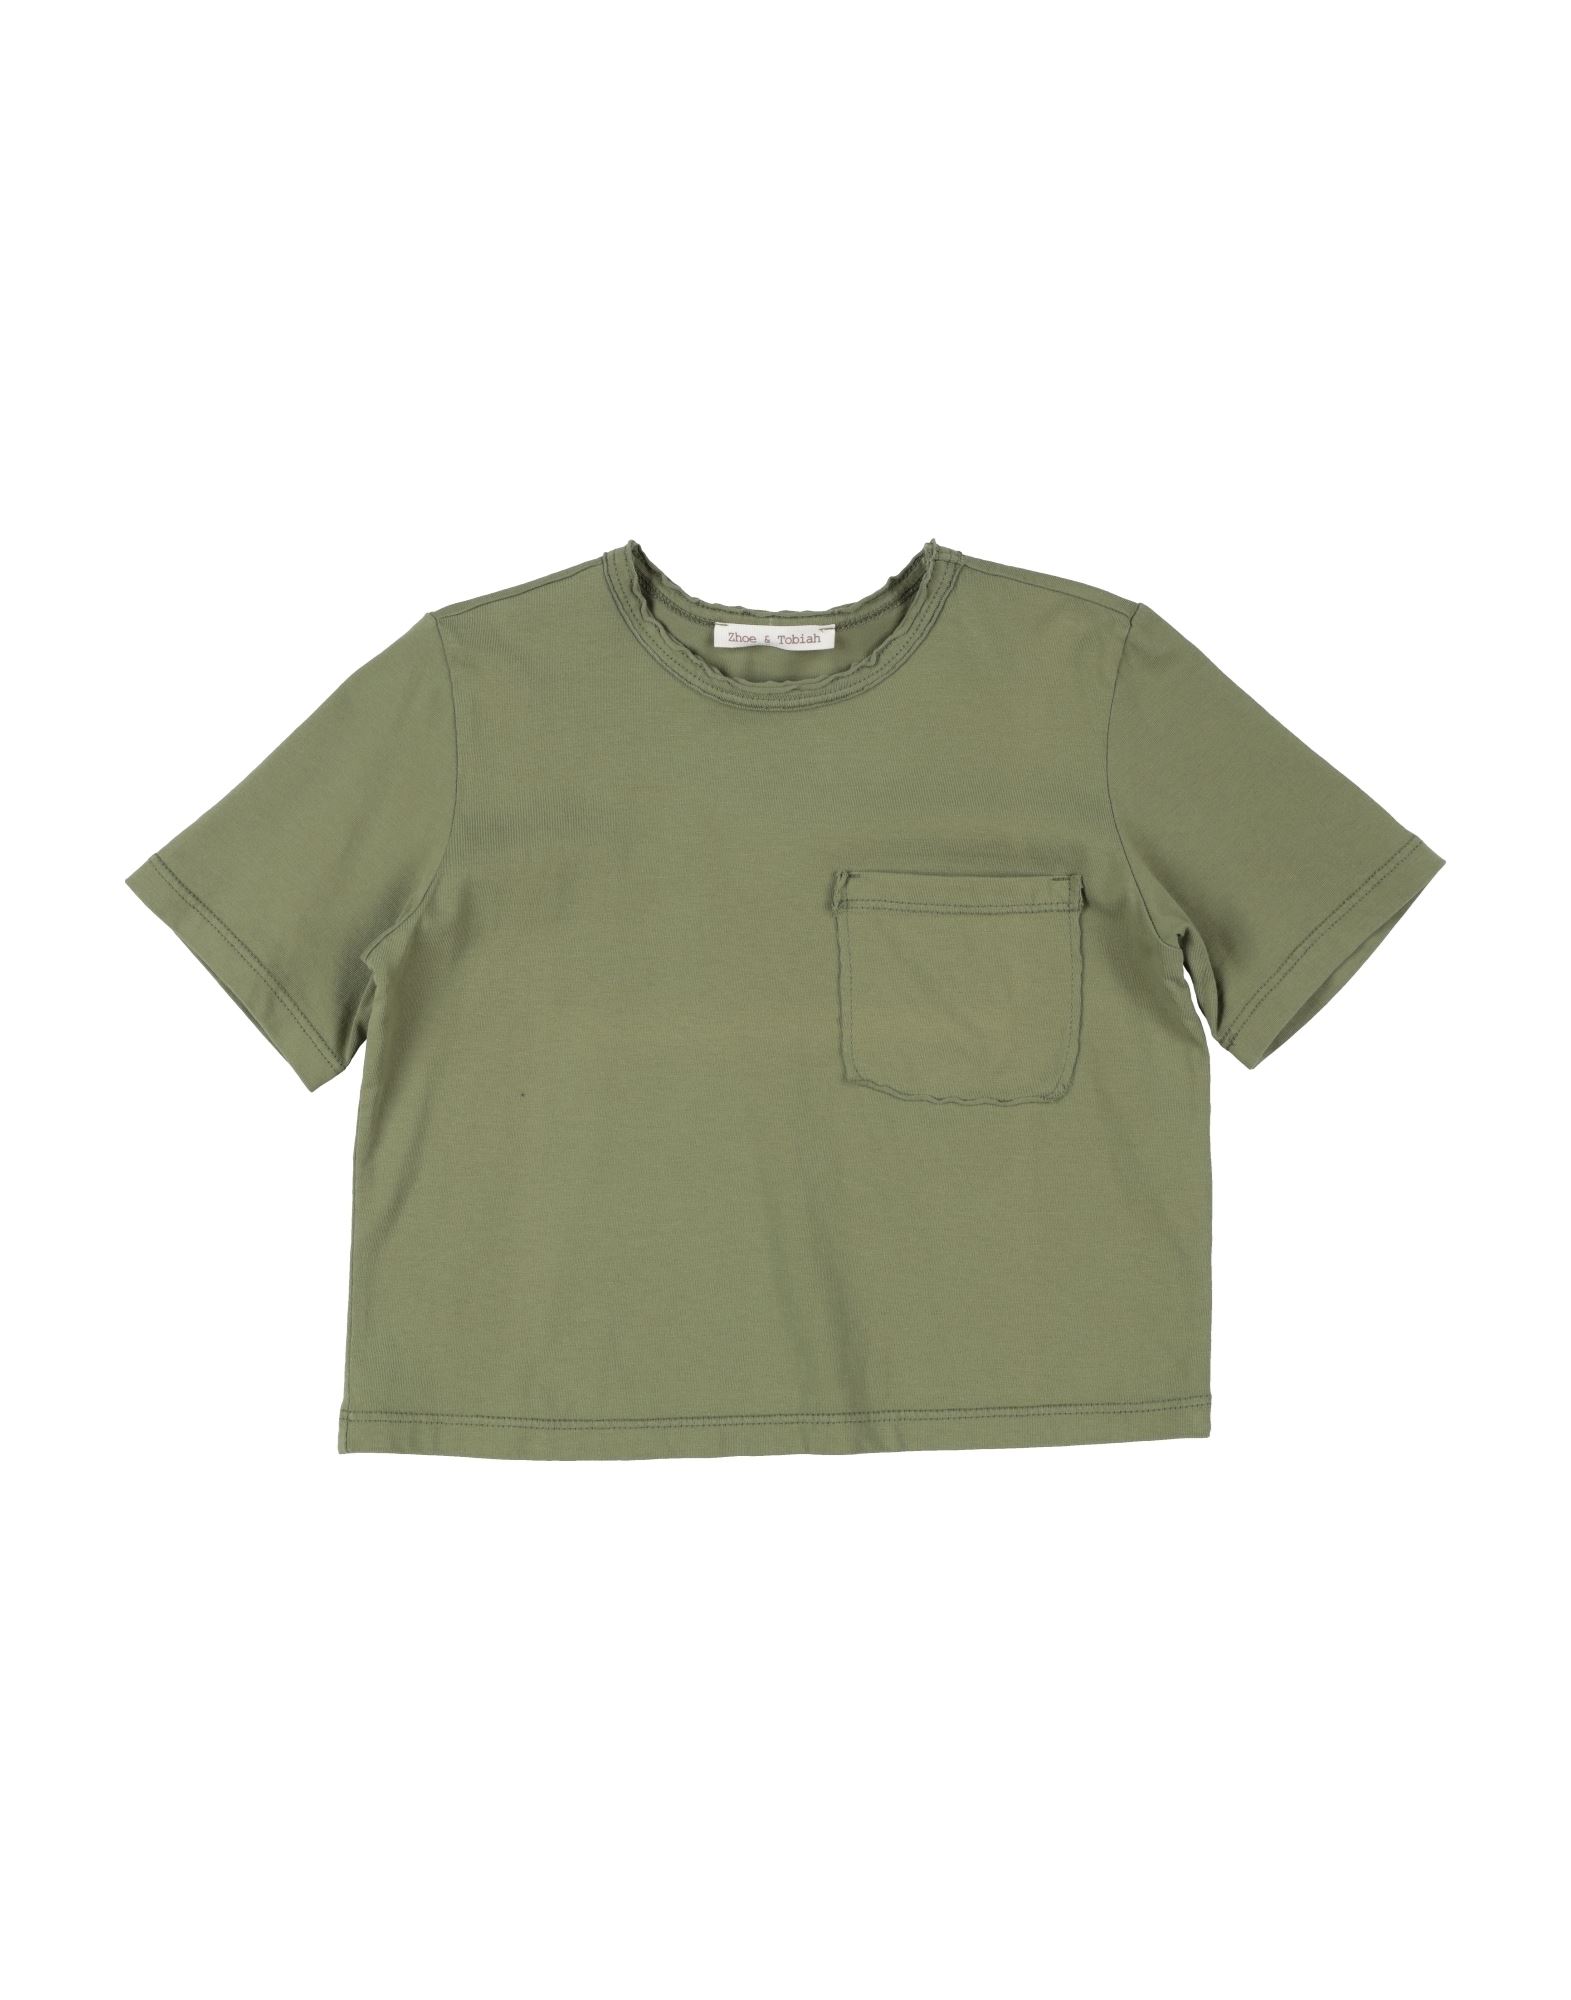 ZHOE & TOBIAH T-shirts Kinder Militärgrün von ZHOE & TOBIAH